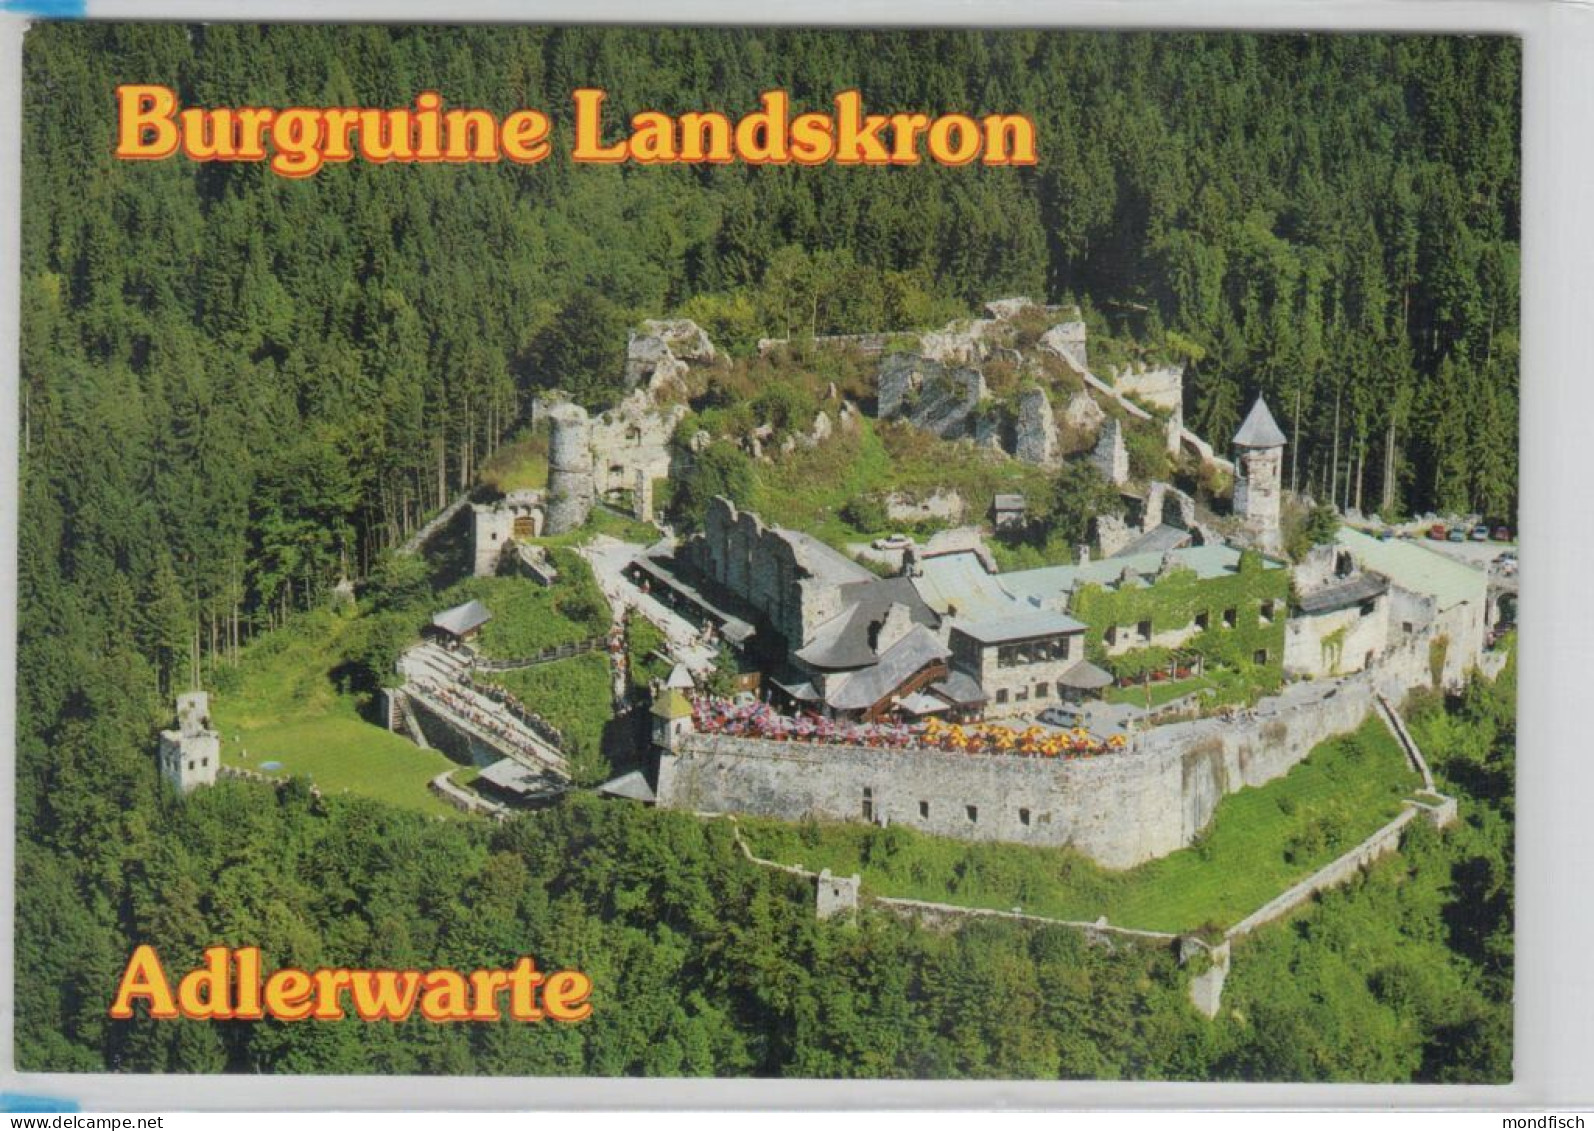 Burgruine Landskron - Adlerwarte - Luftbild - Ossiachersee-Orte